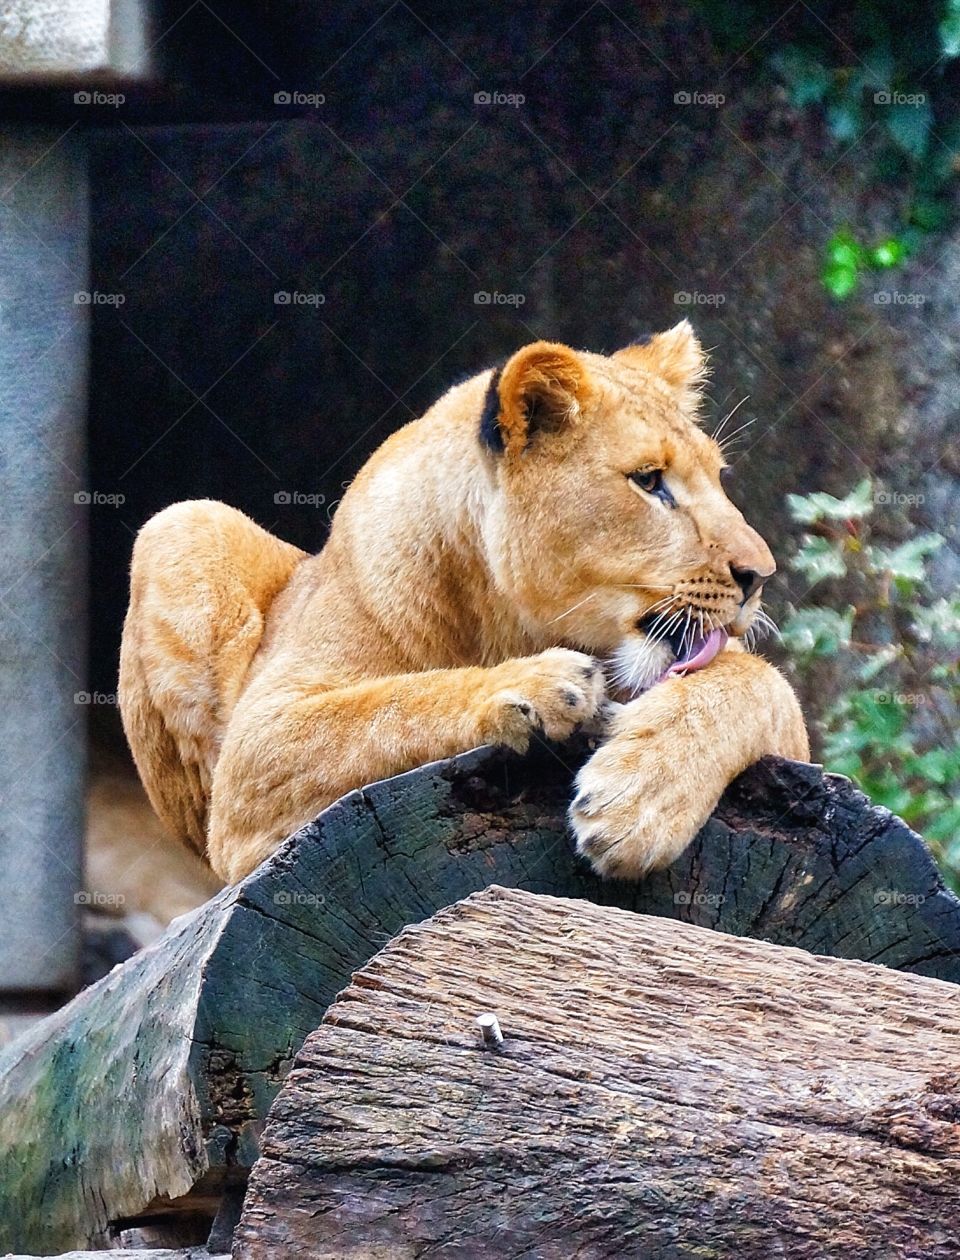 Amsterdam zoo lion's den